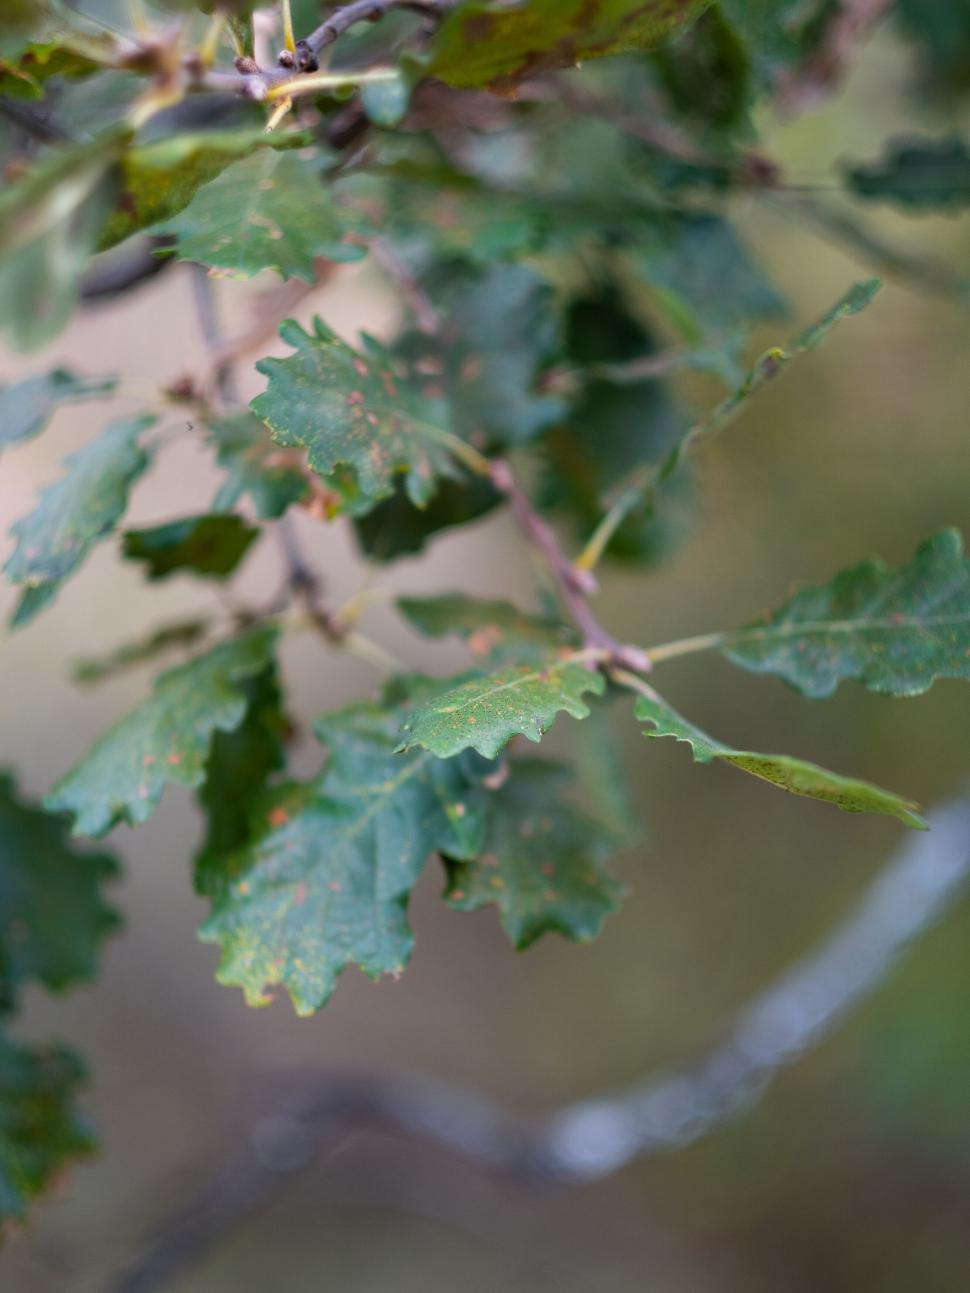 Free Image of Focused shot of green oak leaves 